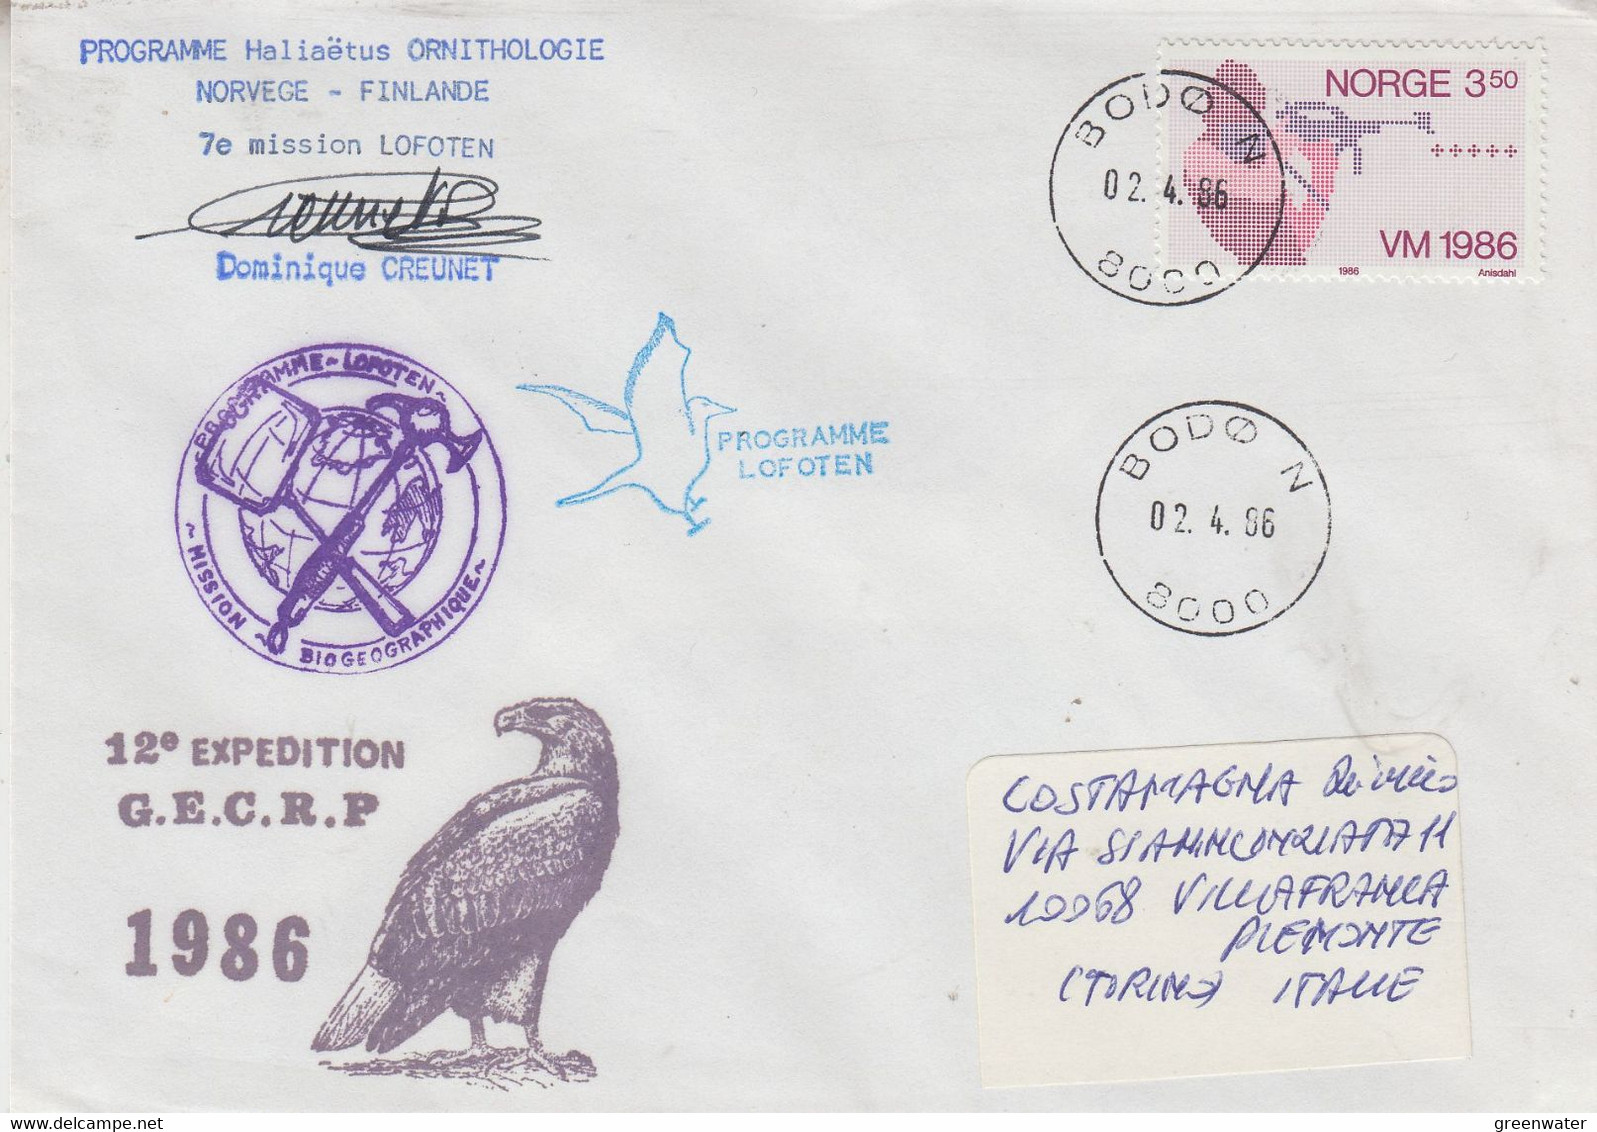 Norway 1986 7e Mission Lofoten Signature Ca Bodo 02-4-1986 (58152) - Onderzoeksprogramma's